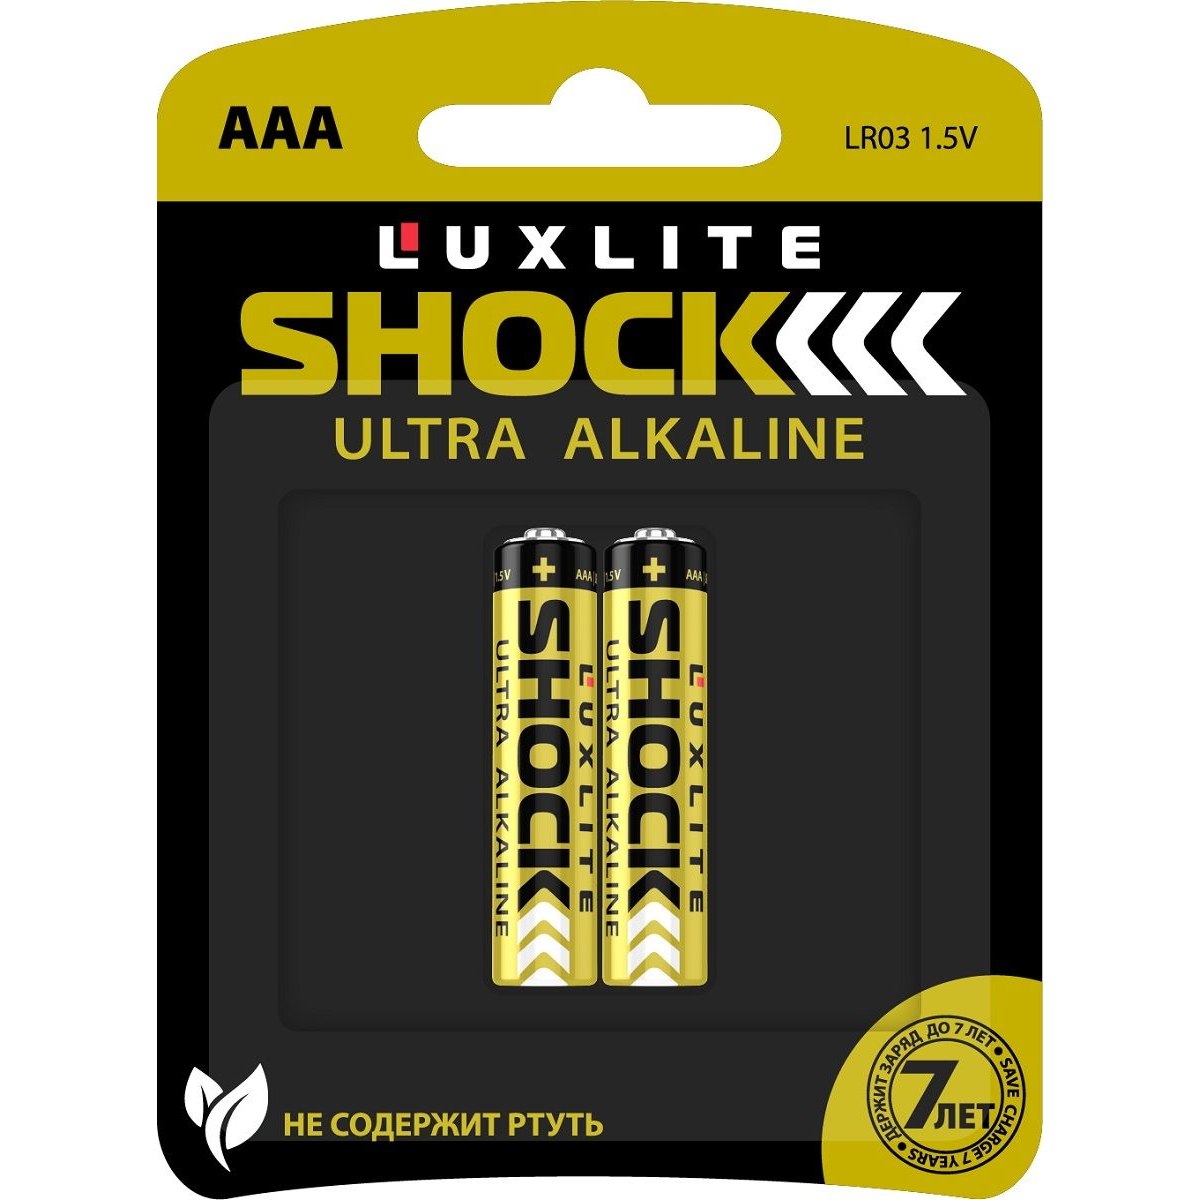 Luxlite Shock - Алкалиновые батарейки ААА, 2 шт - фото 1